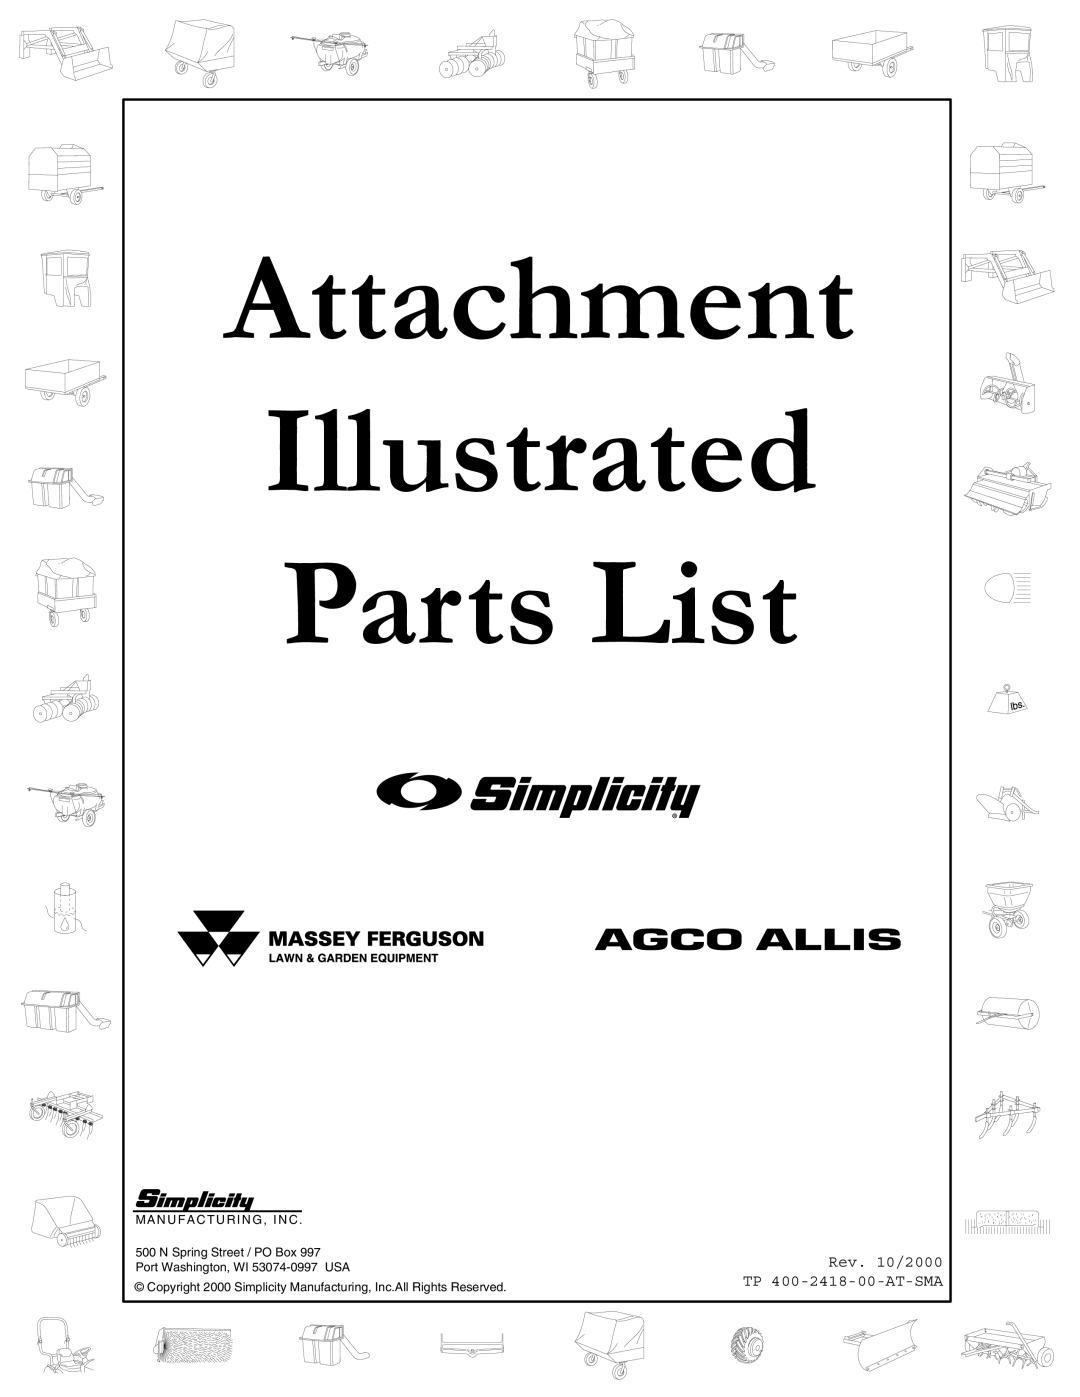 Snapper manual Rev. 10/2000 TP 400-2418-00-AT-SMA, Attachment Illustrated Parts List, M A N U F A C T U R I N G , I N C 